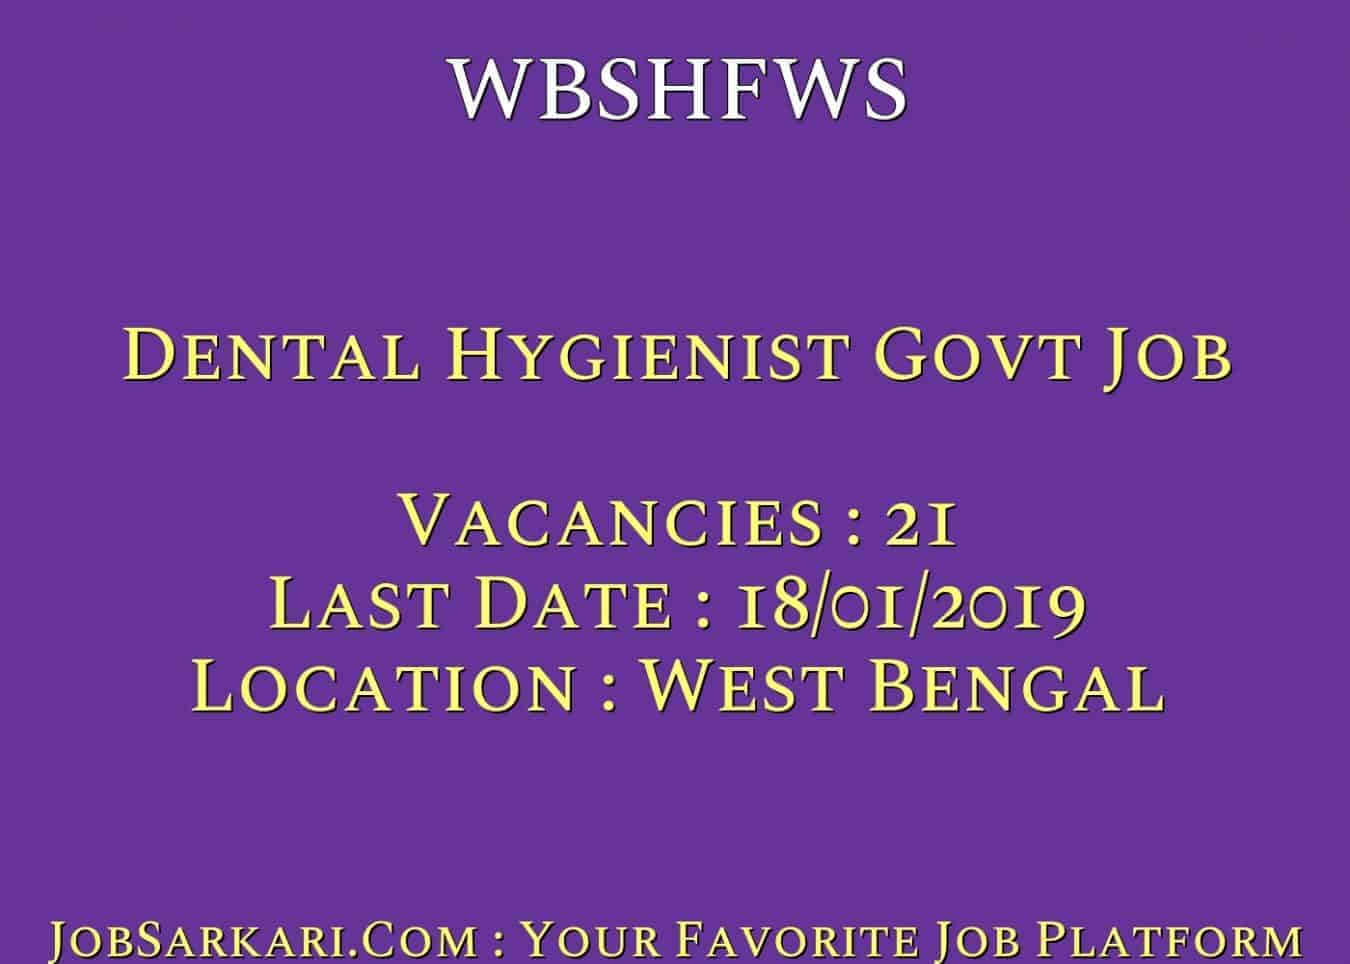 WBSHFWS Recruitment 2019 For Dental Hygienist Govt Job